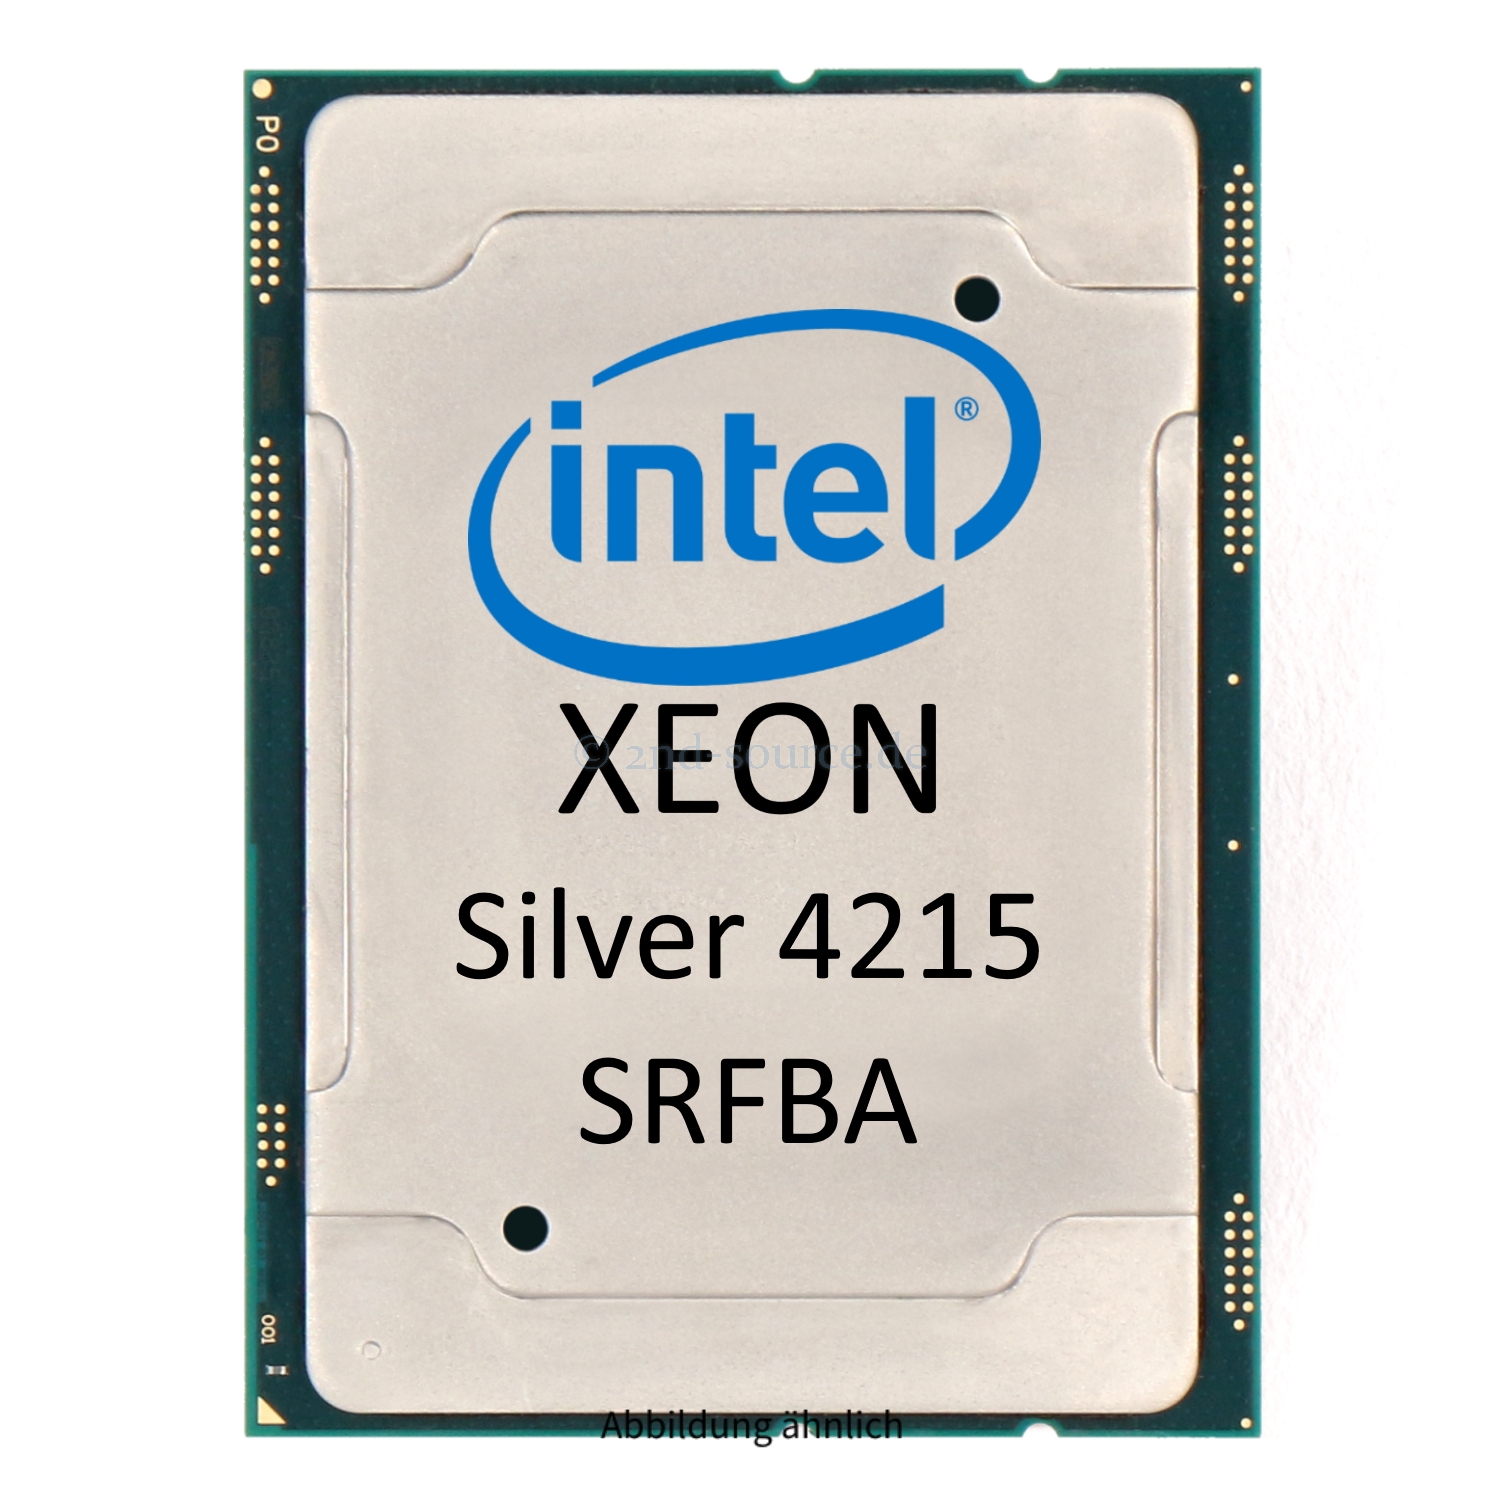 Intel Xeon Silver 4215 2.50GHz 11MB 8-Core CPU 85W SRFBA CD8069504212701